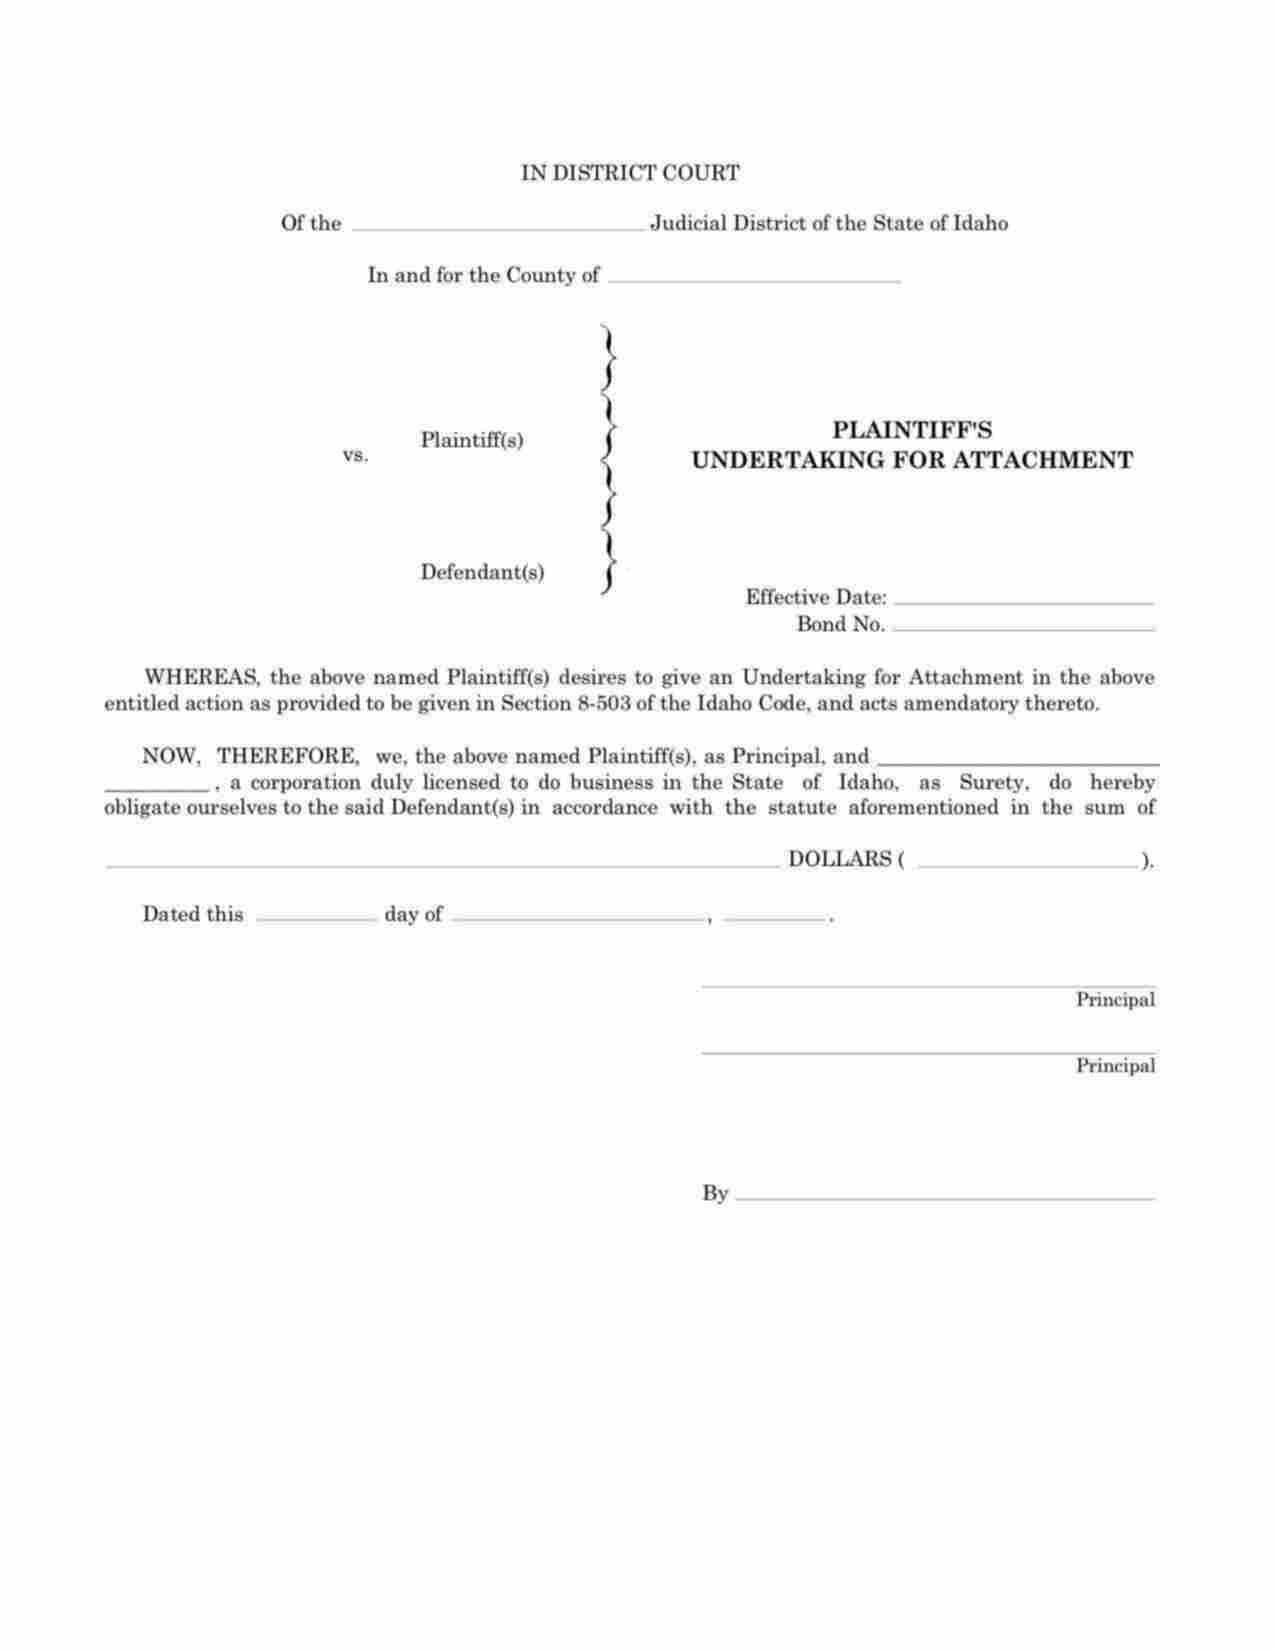 Idaho Plaintiffs Undertaking for Attachment Bond Form